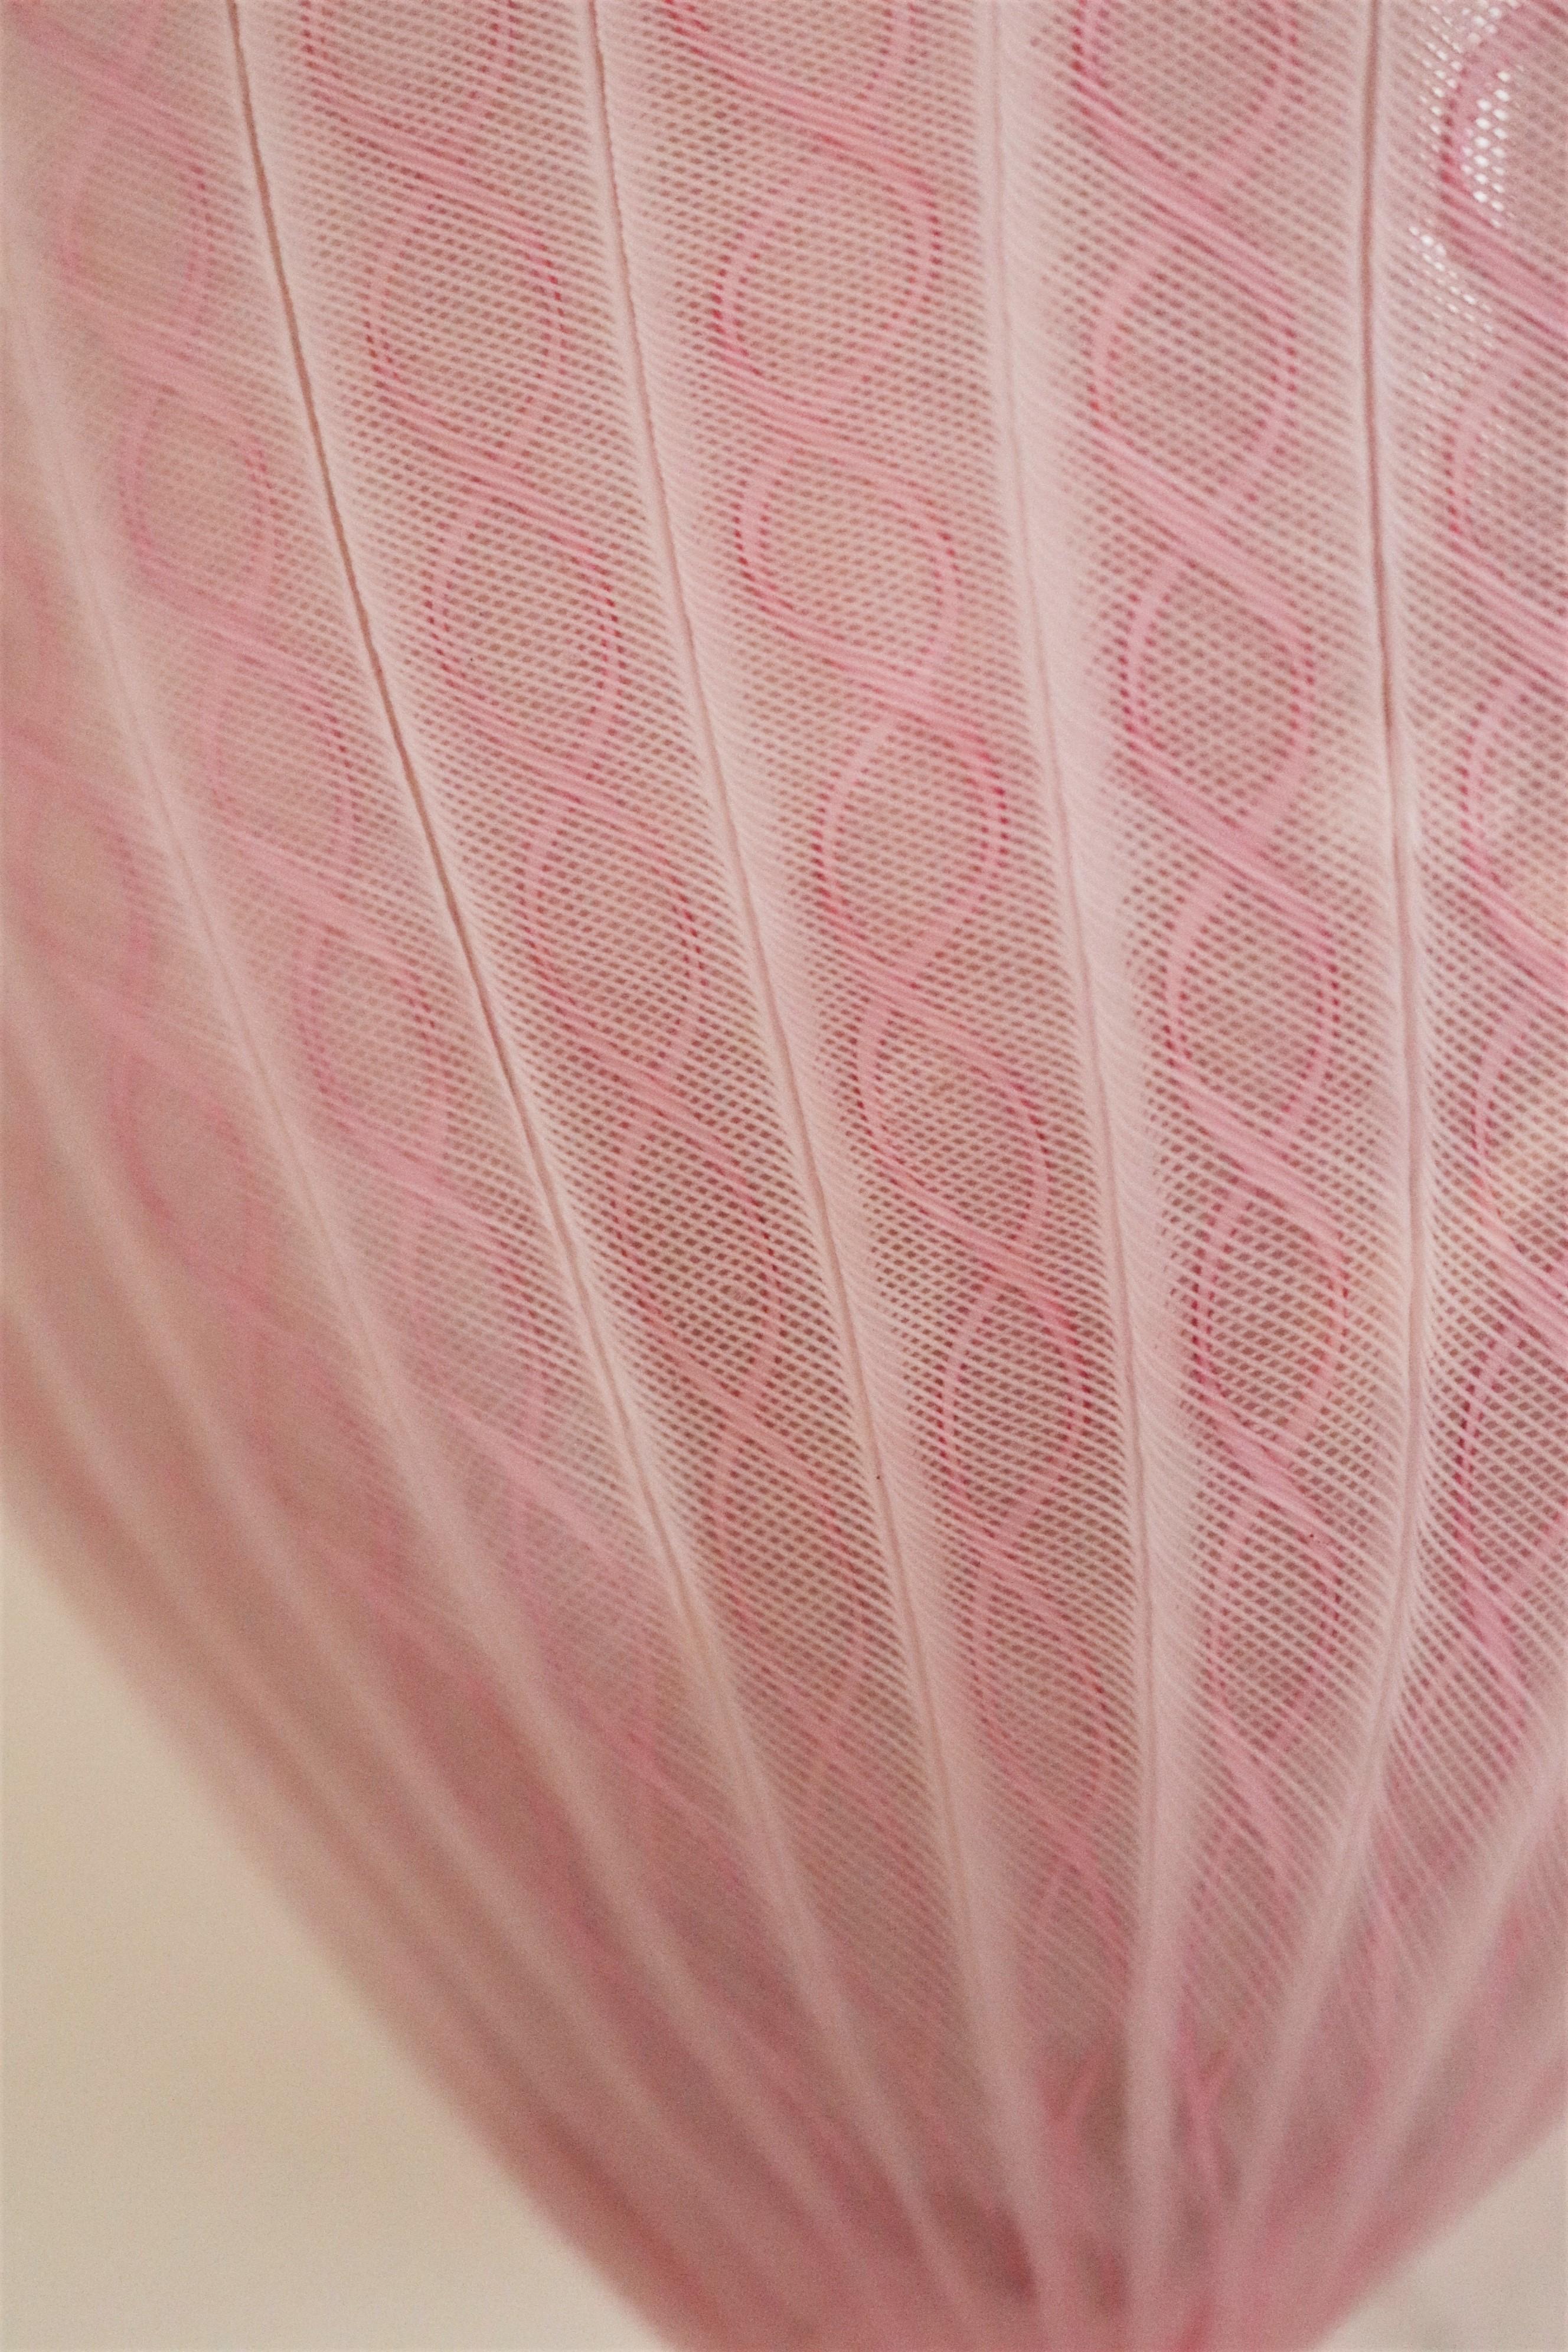 Fulvio Bianconi Venini Italian Midcentury Wall Sconces in Pink Murano Glass In Good Condition For Sale In Morazzone, Varese